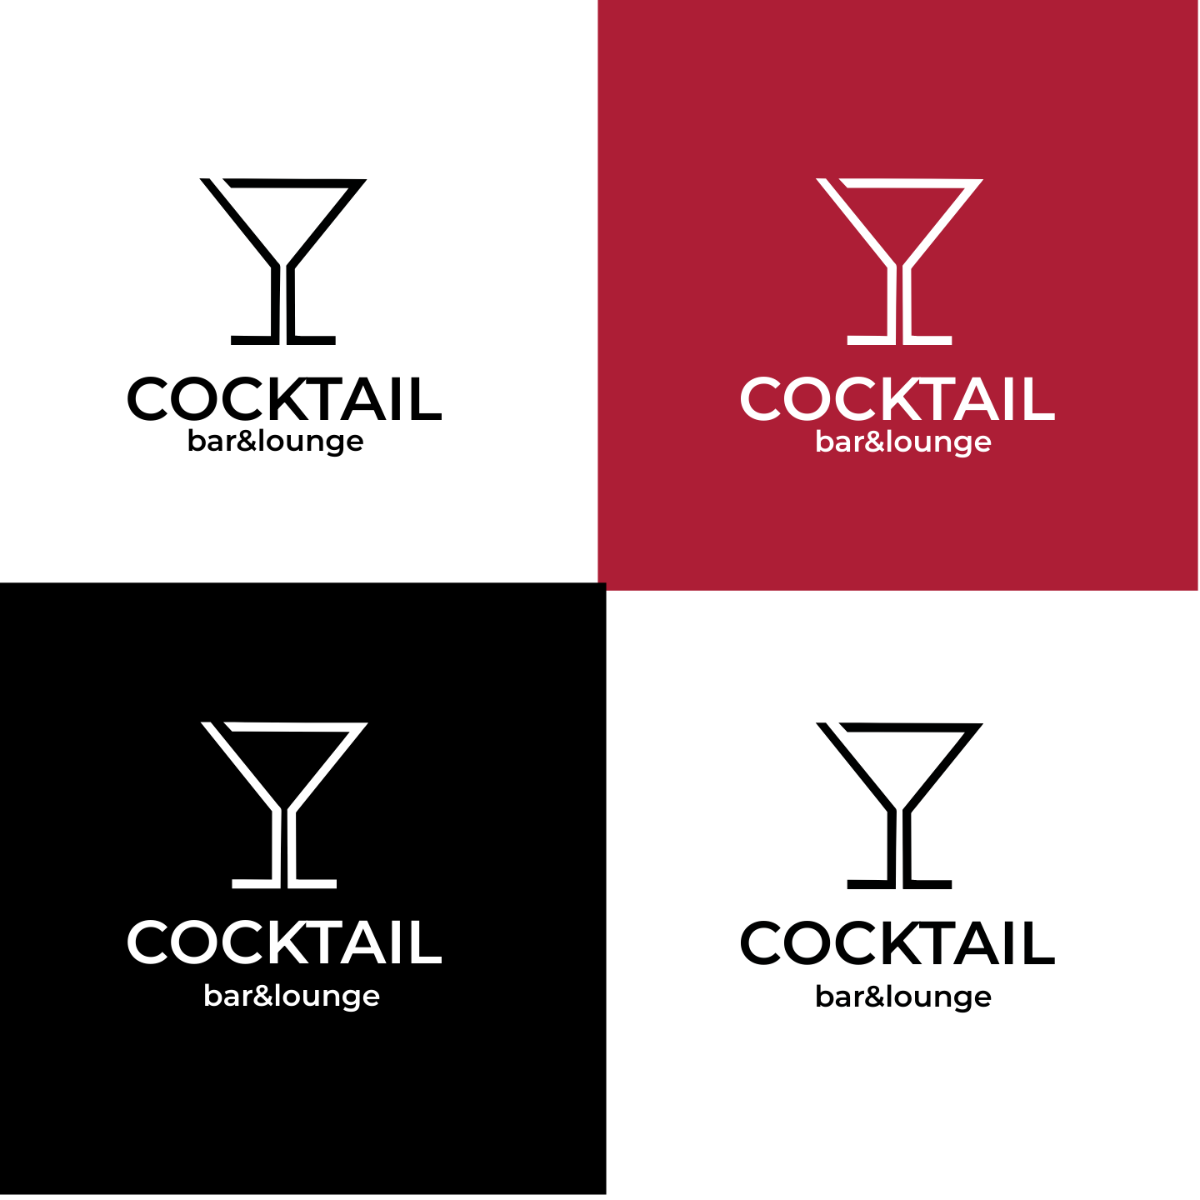 Bar/Lounge Logo Template